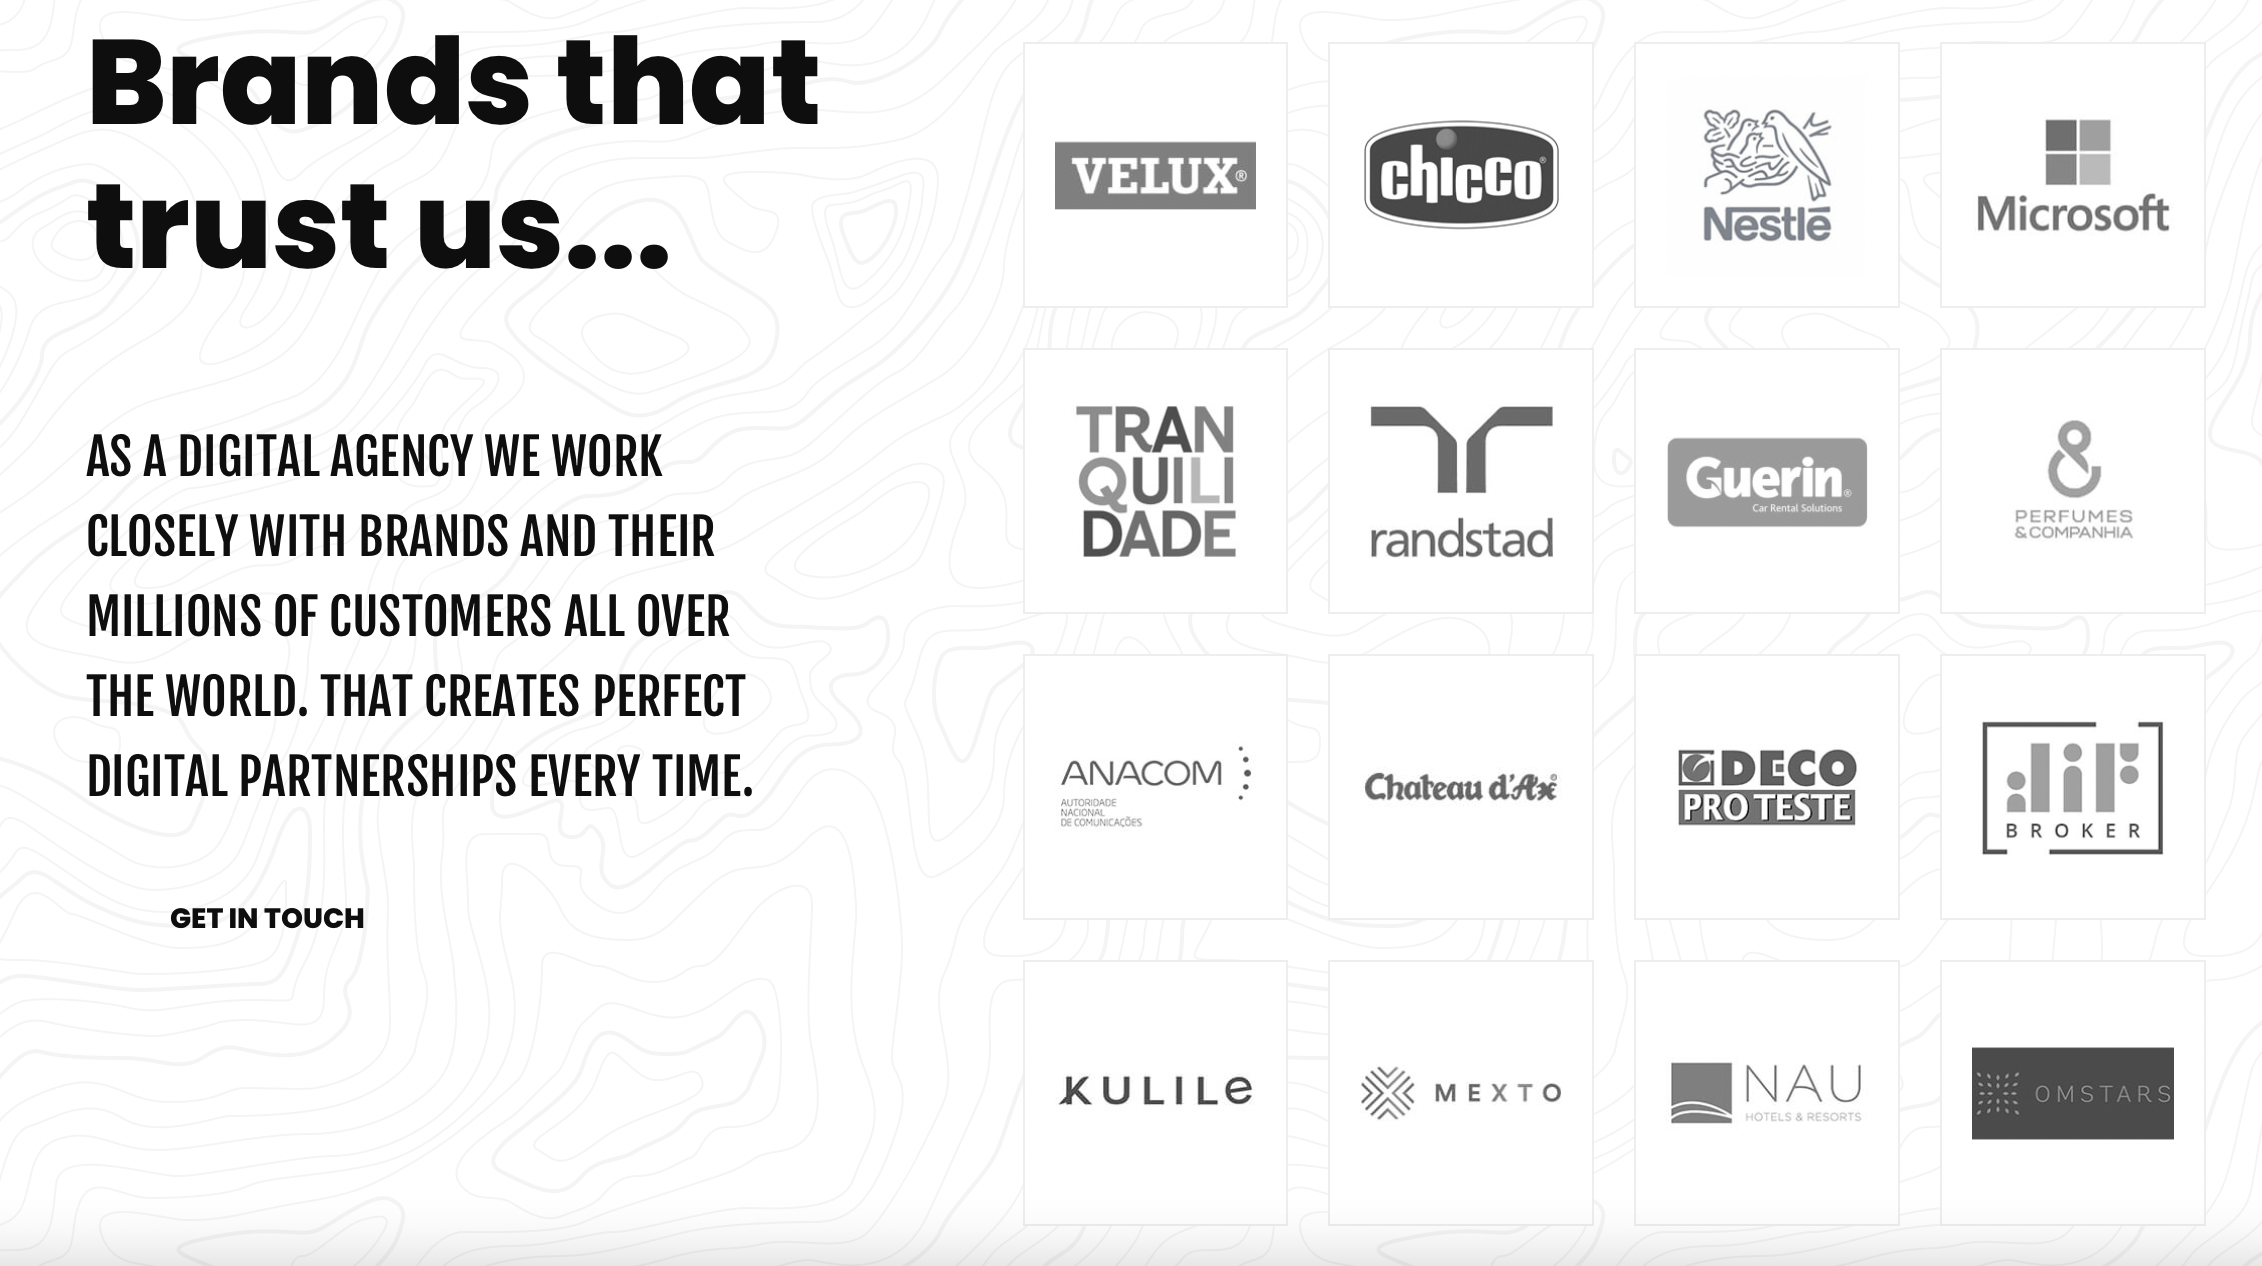 Brands that trust us...